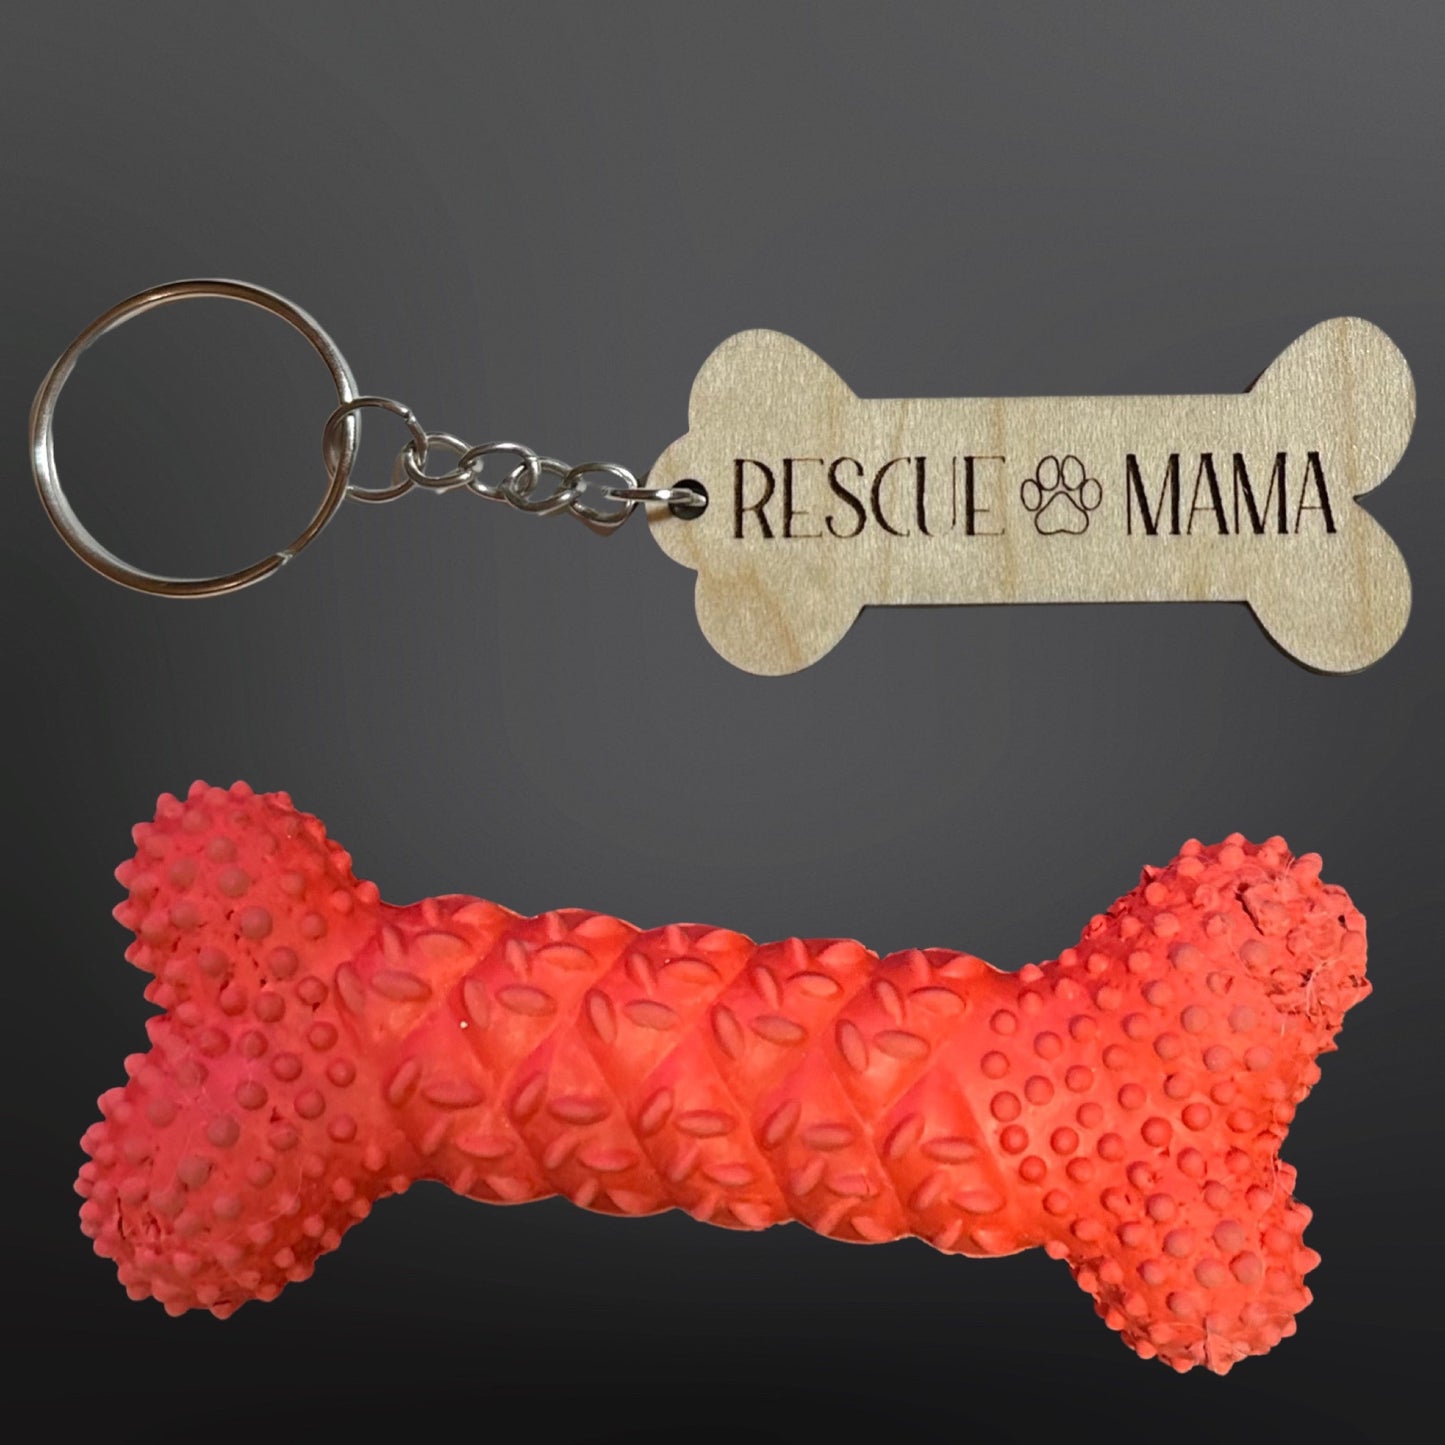 Rescue Mama Laser Cut Lightweight Wood Keychain